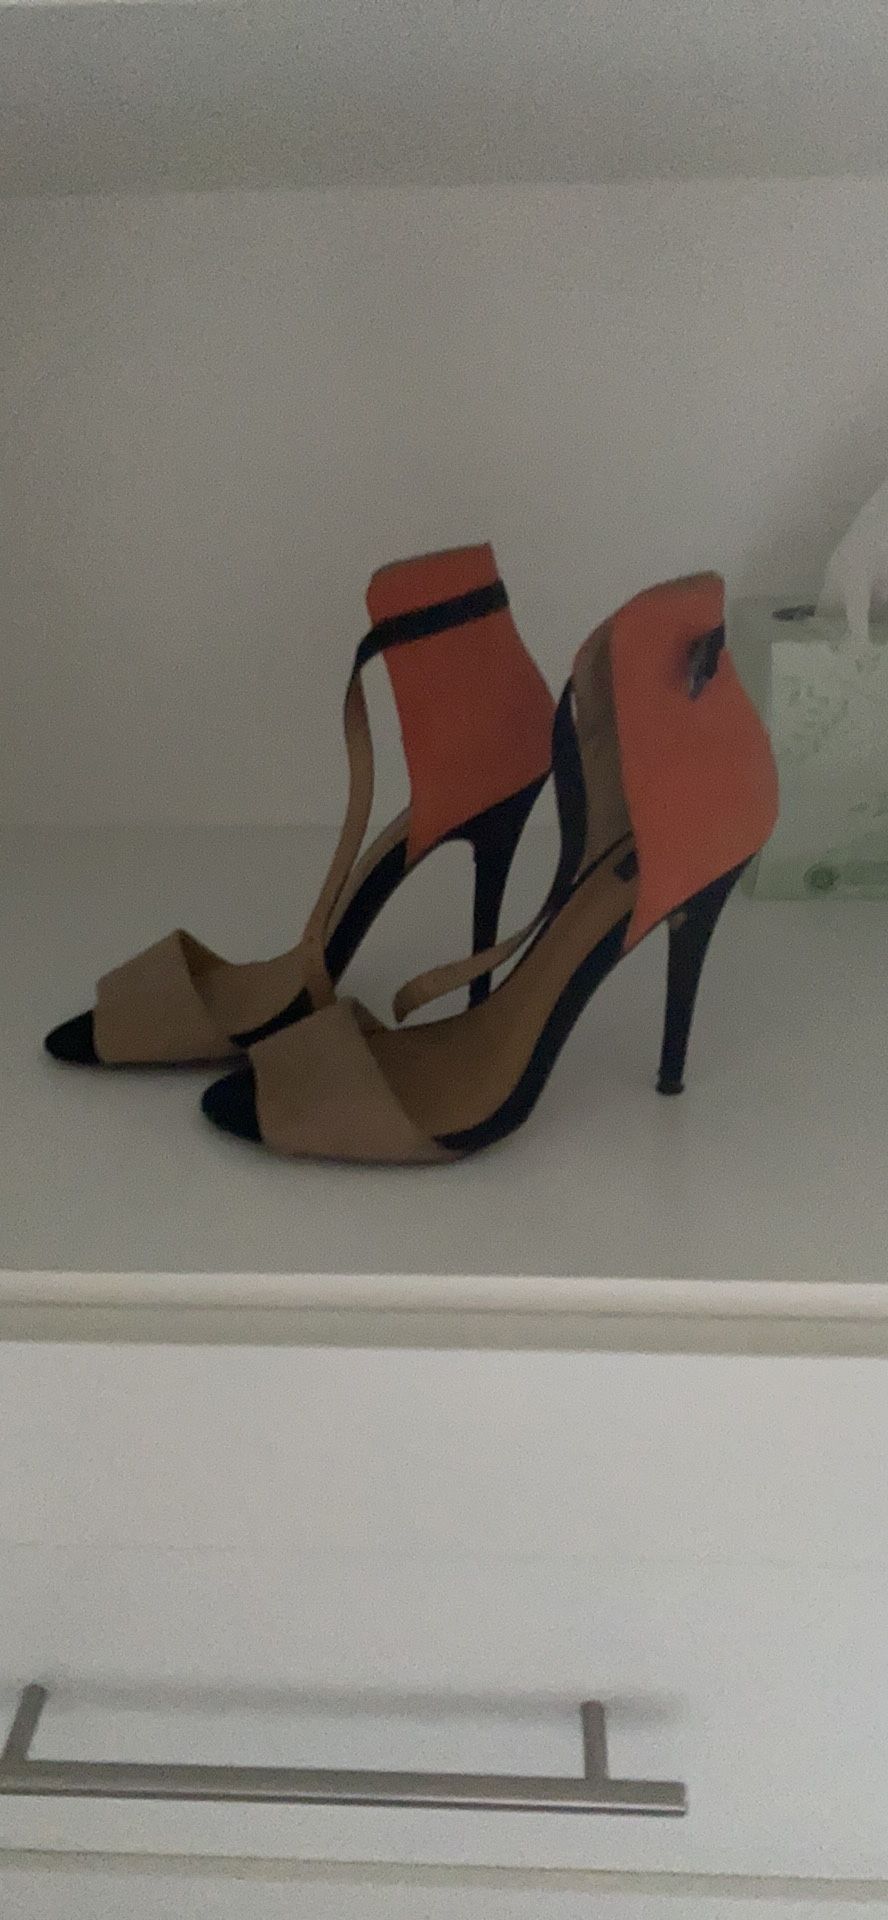 Zara hight heel